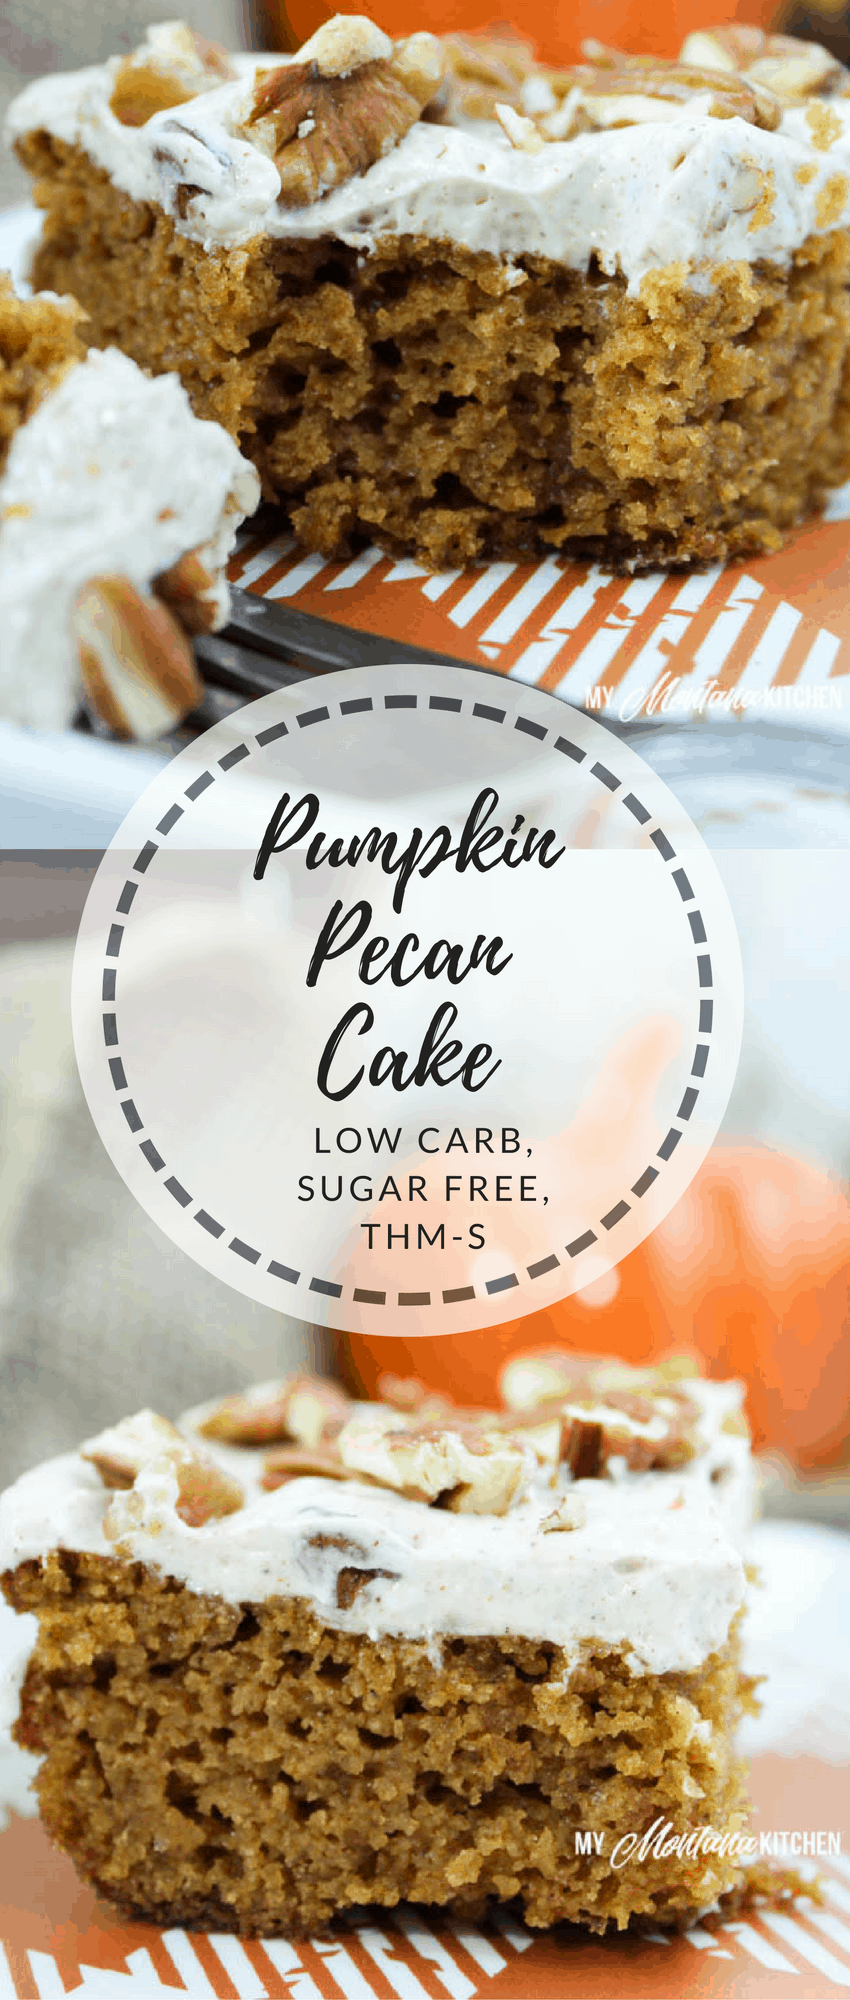 Pumpkin Pecan Cake (Low Carb, Sugar Free, THM-S) #trimhealthymama #thm #pumpkin #pumpkincake #pecan #sugarfree #lowcarb #glutenfree #mymontanakitchen